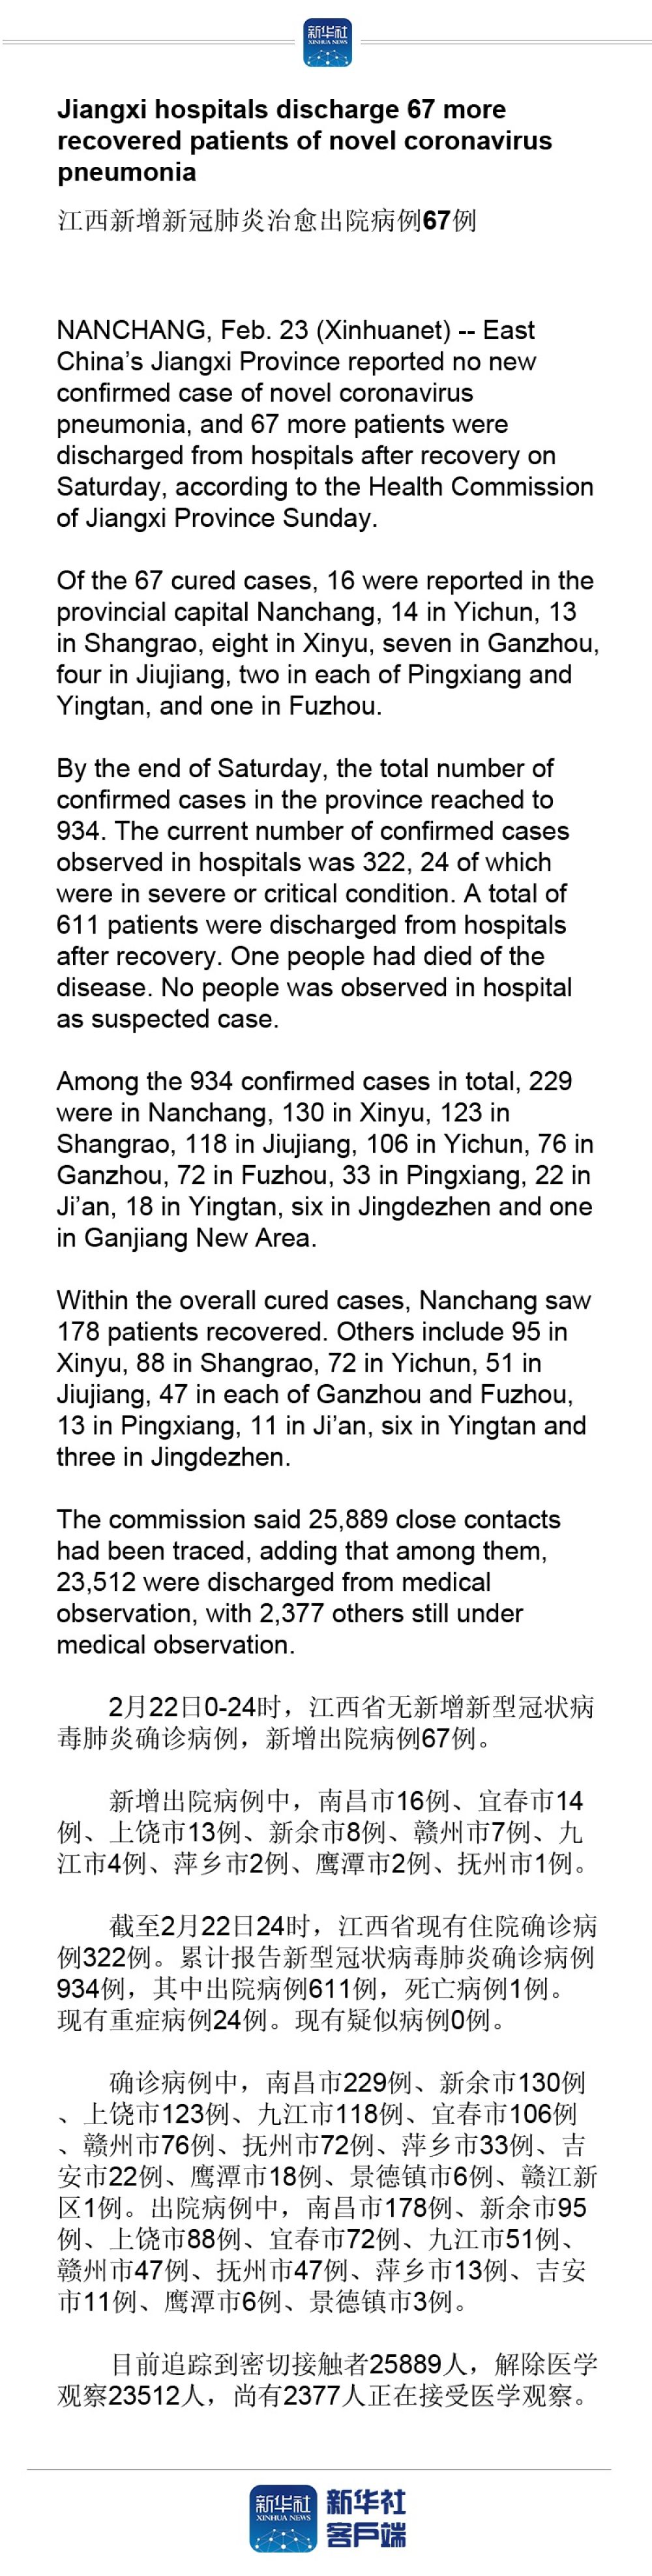 Jiangxi hospitals discharge 67 more recovered patients of novel coronavirus pneumonia